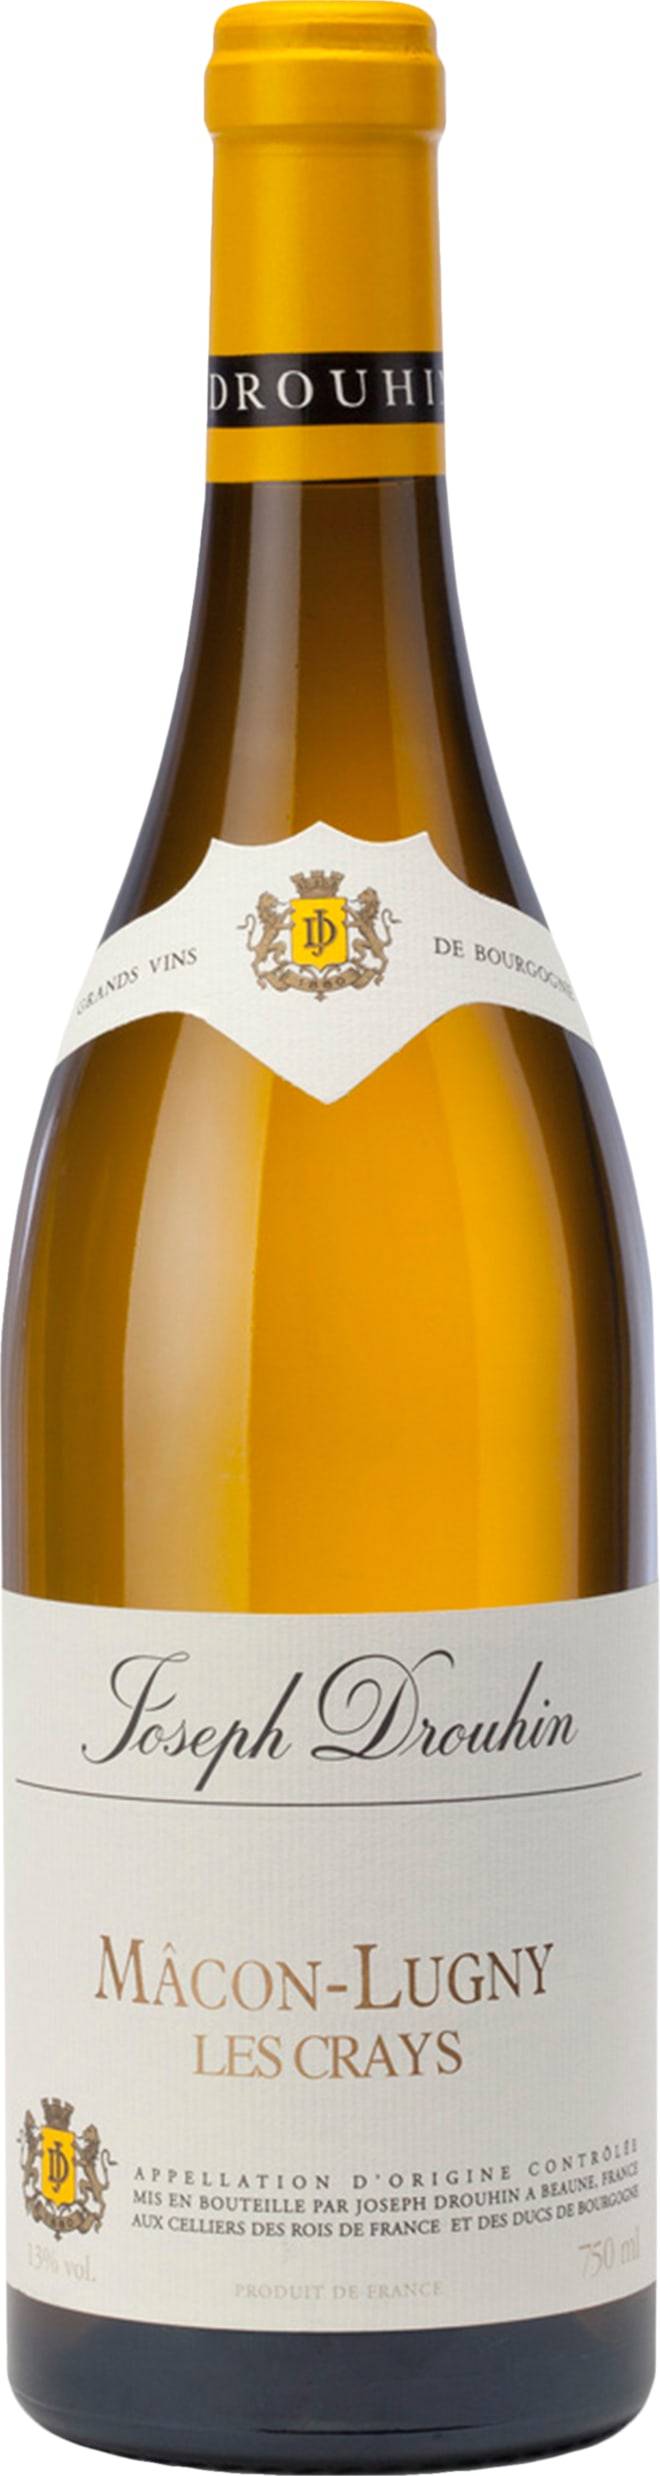 Joseph Drouhin Macon-Lugny Les Crays 2021 75cl - Buy Joseph Drouhin Wines from GREAT WINES DIRECT wine shop